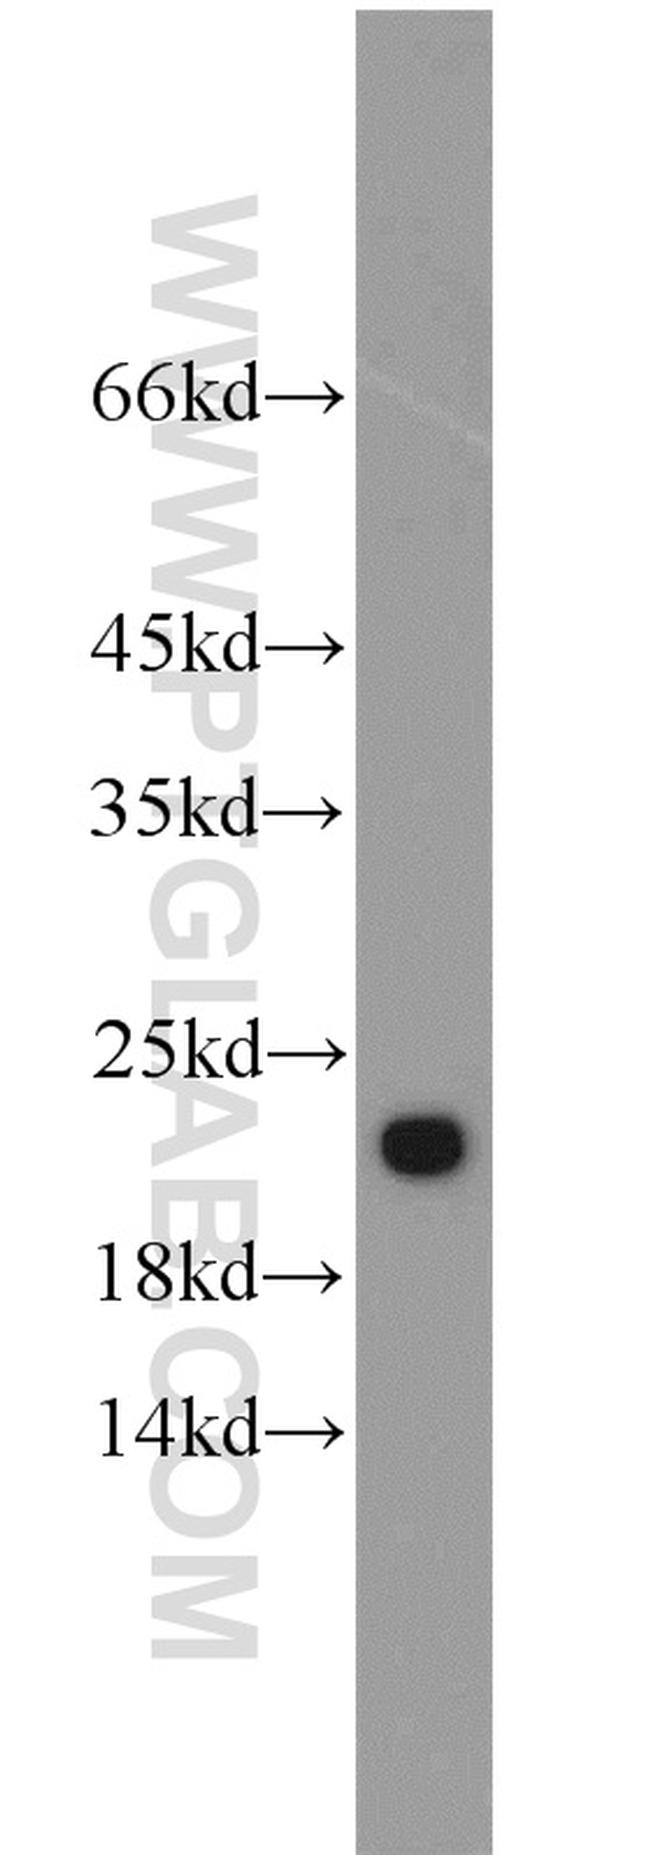 TRAPPC3 Antibody in Western Blot (WB)